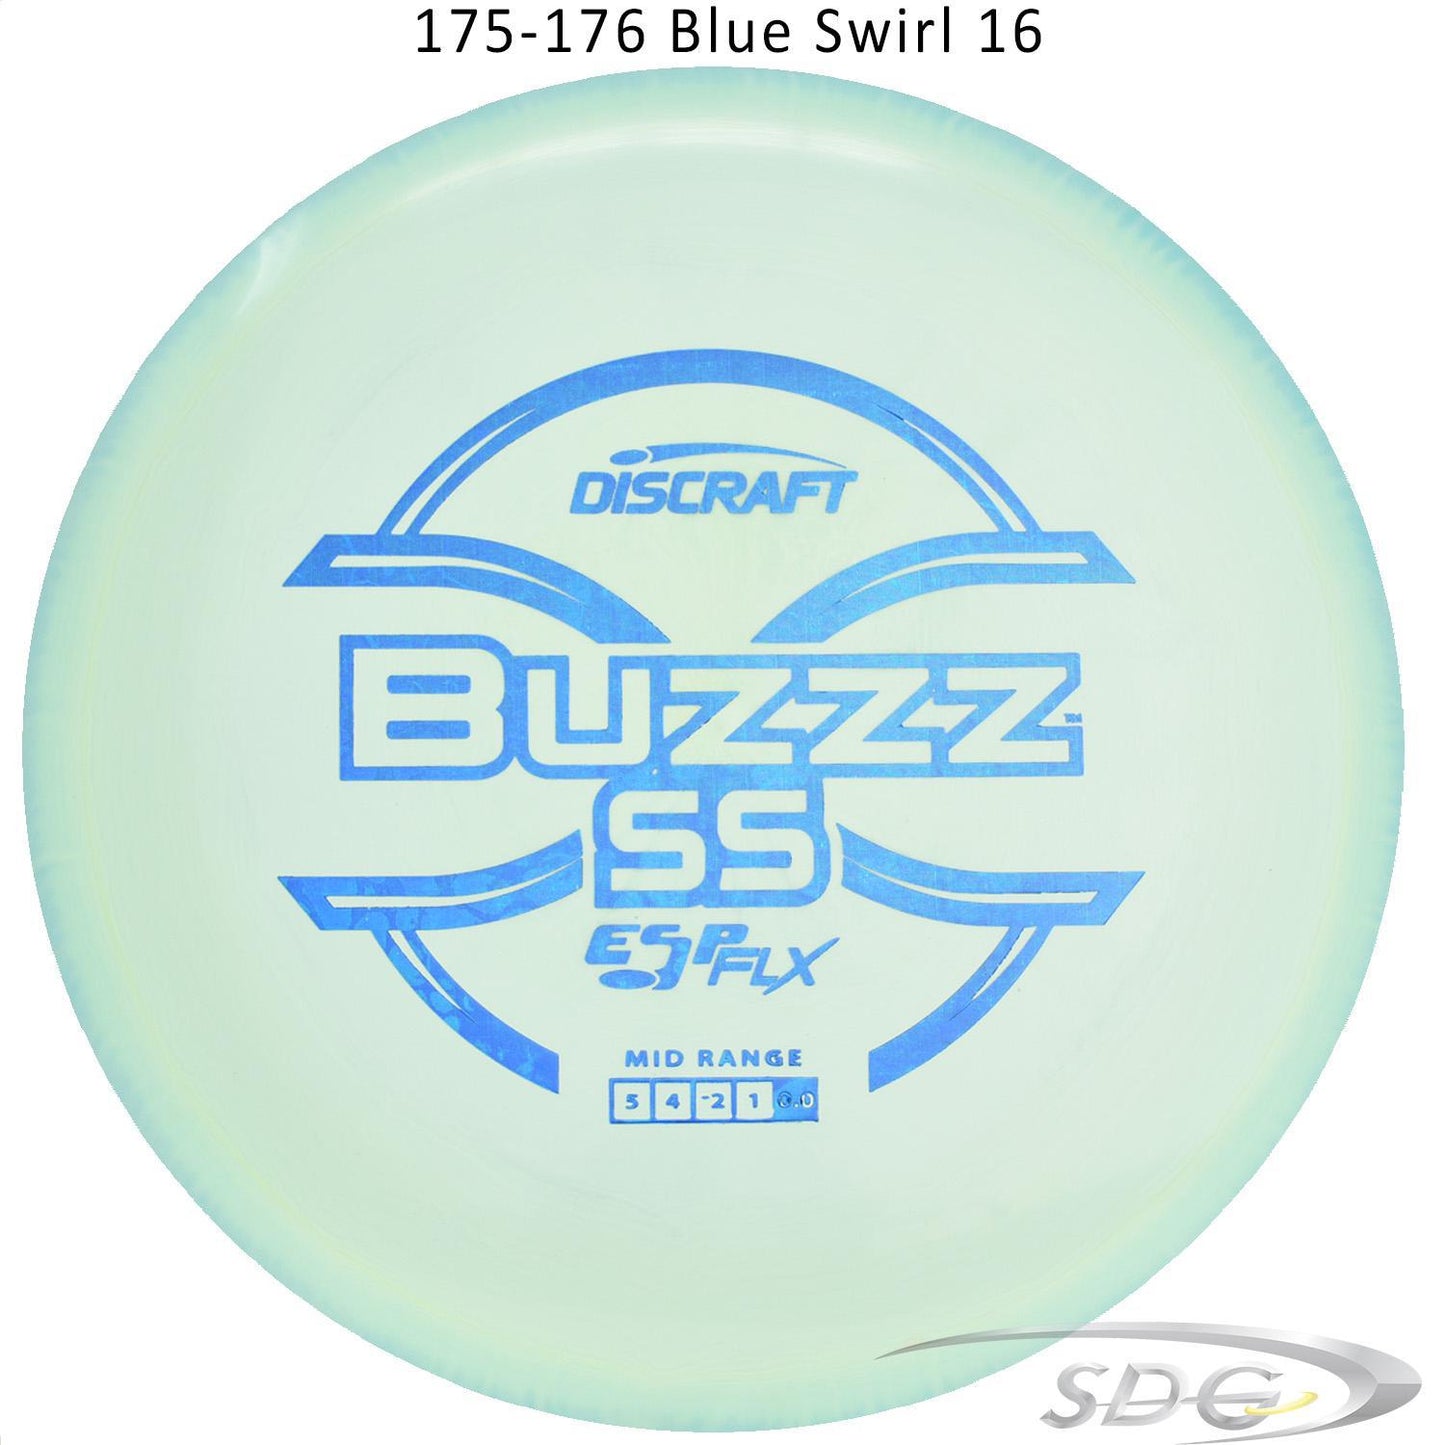 discraft-esp-flx-buzzz-ss-disc-golf-mid-range 175-176 Blue Swirl 16 